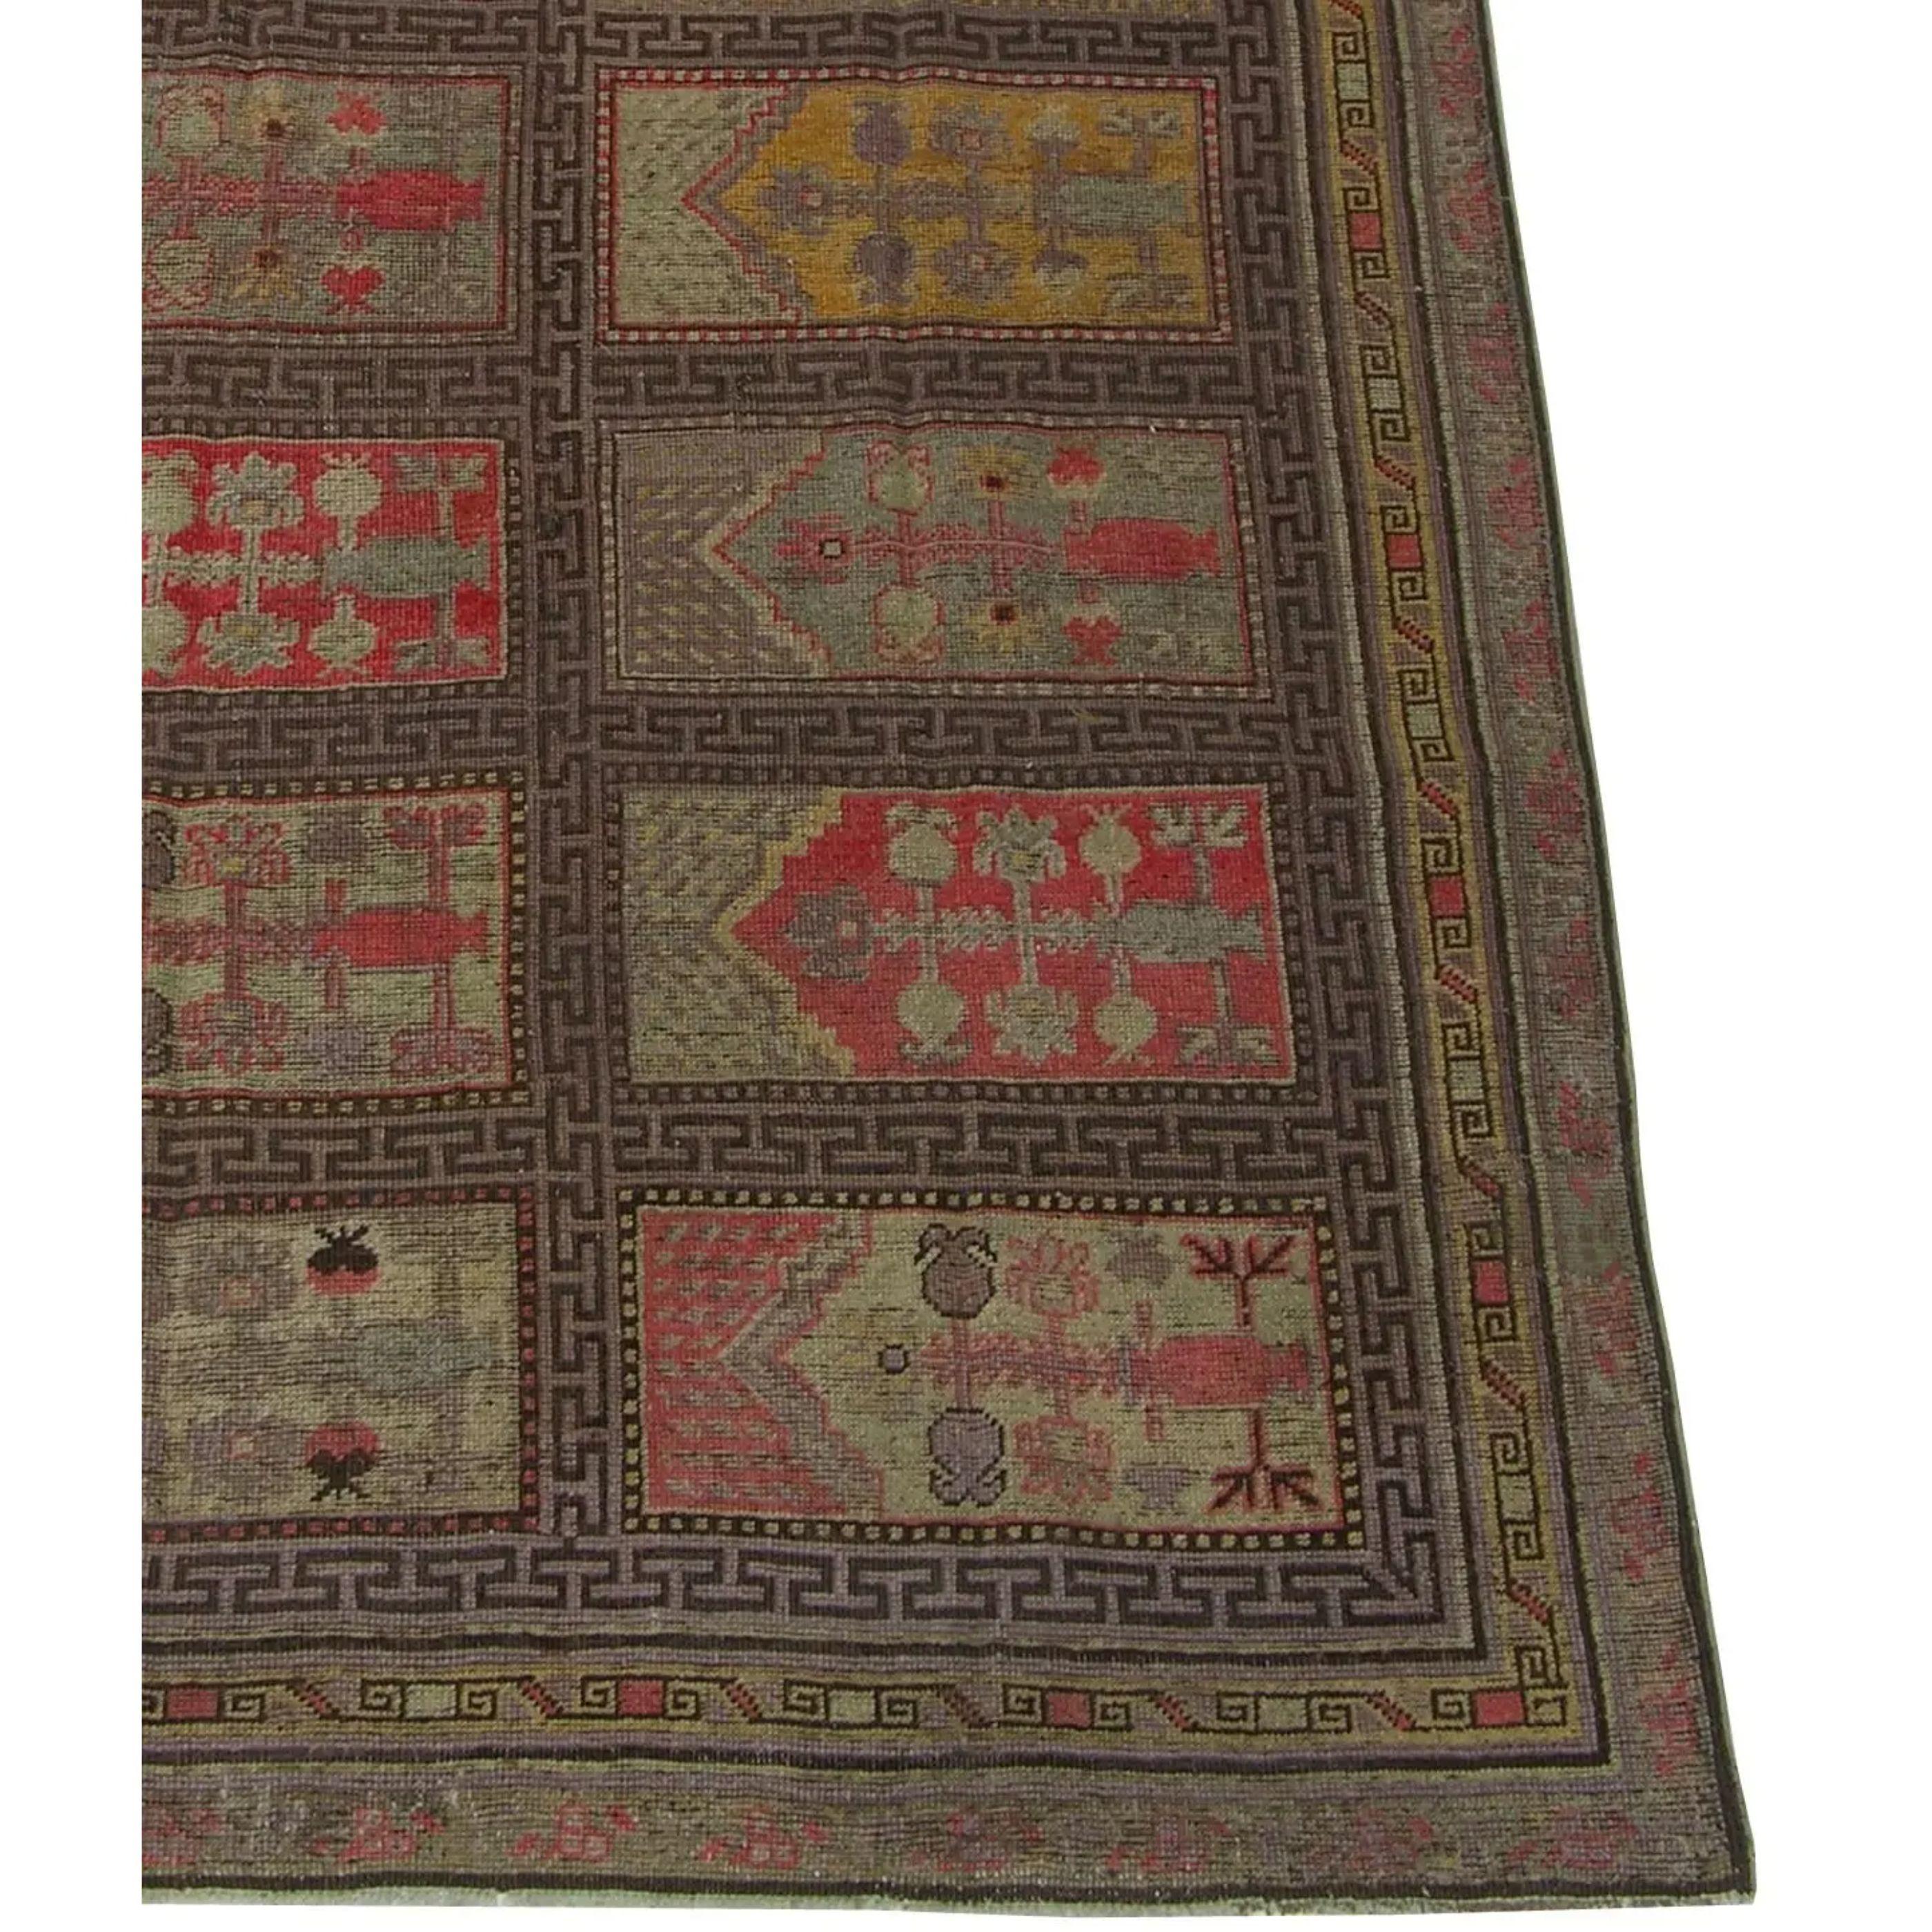 Circa 1900 Antique Khotan Samarkand Rug. Ce tapis est de style traditionnel.